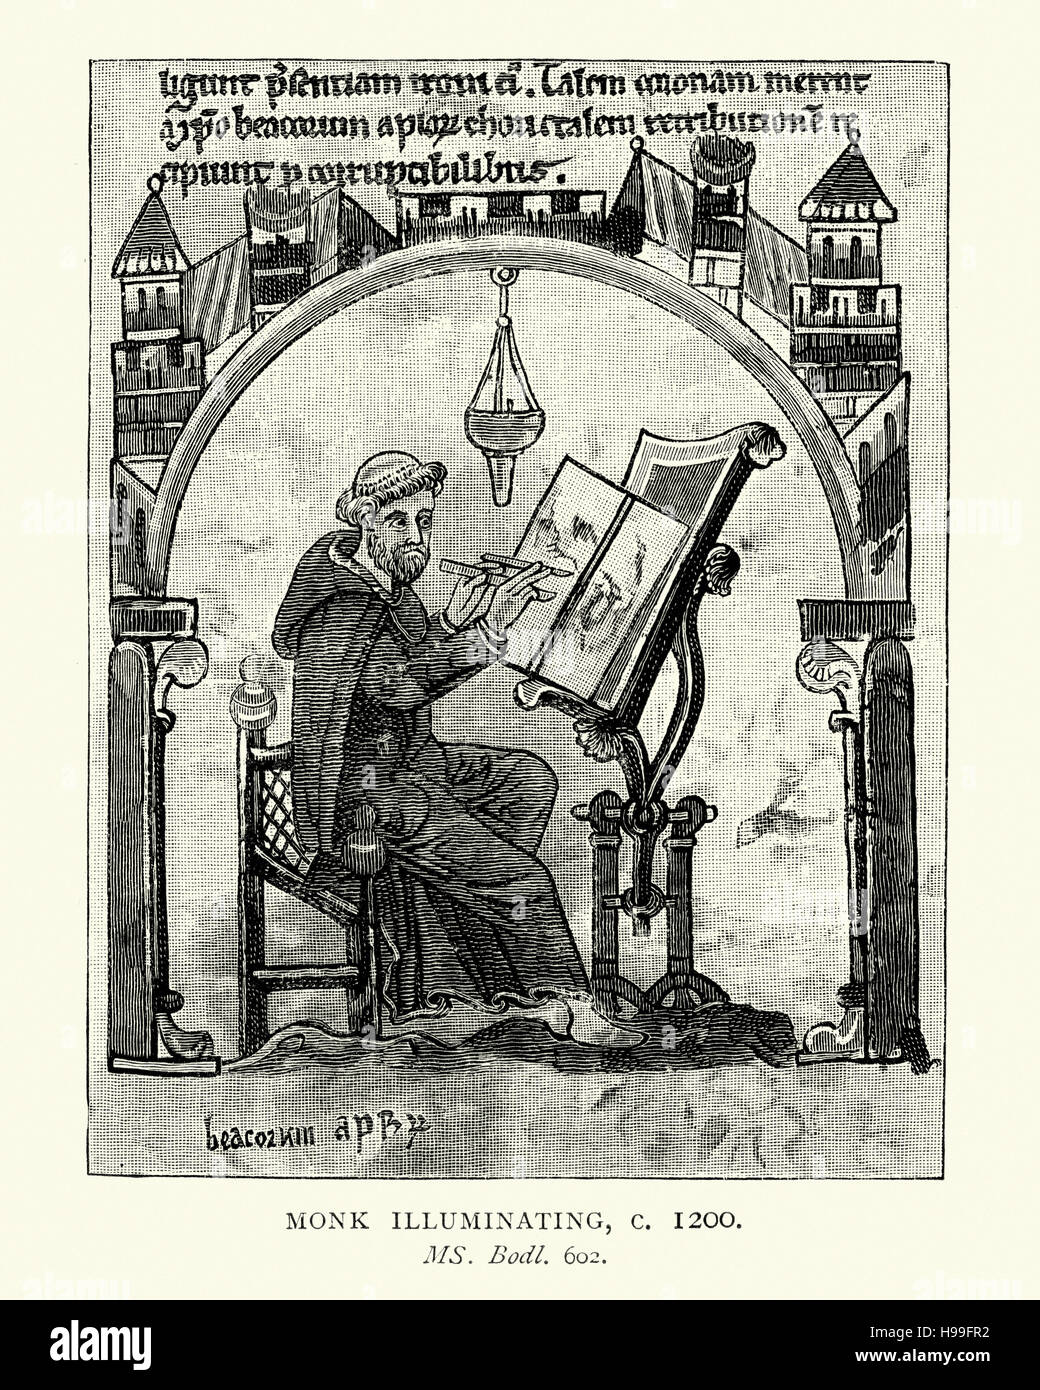 Monje medieval iluminando un libro, c. 1200 Foto de stock